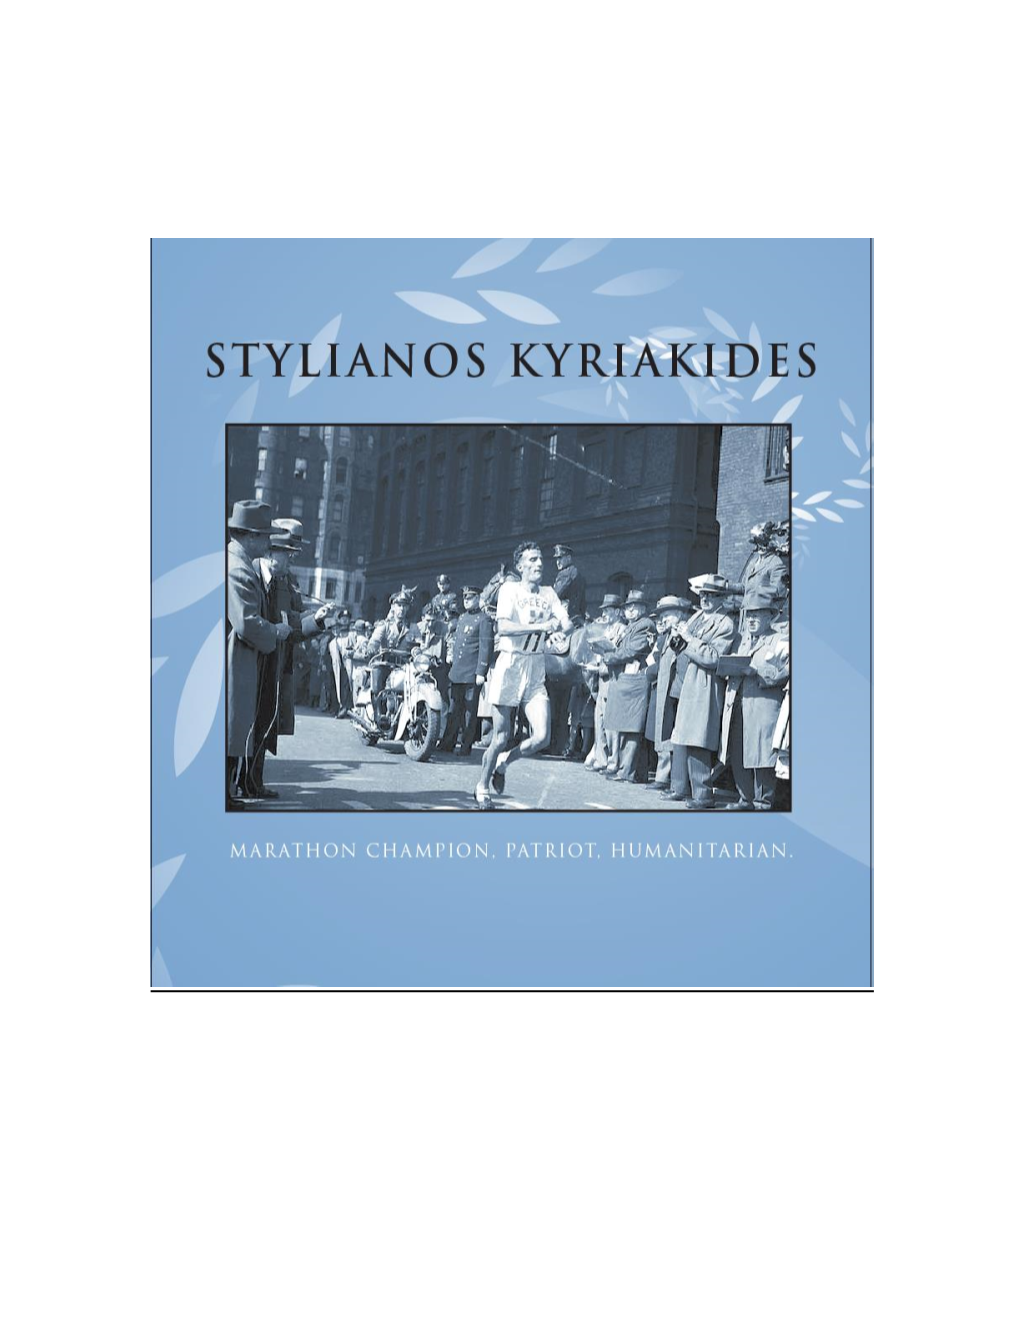 Stylianos (Stelios) Kyriakides